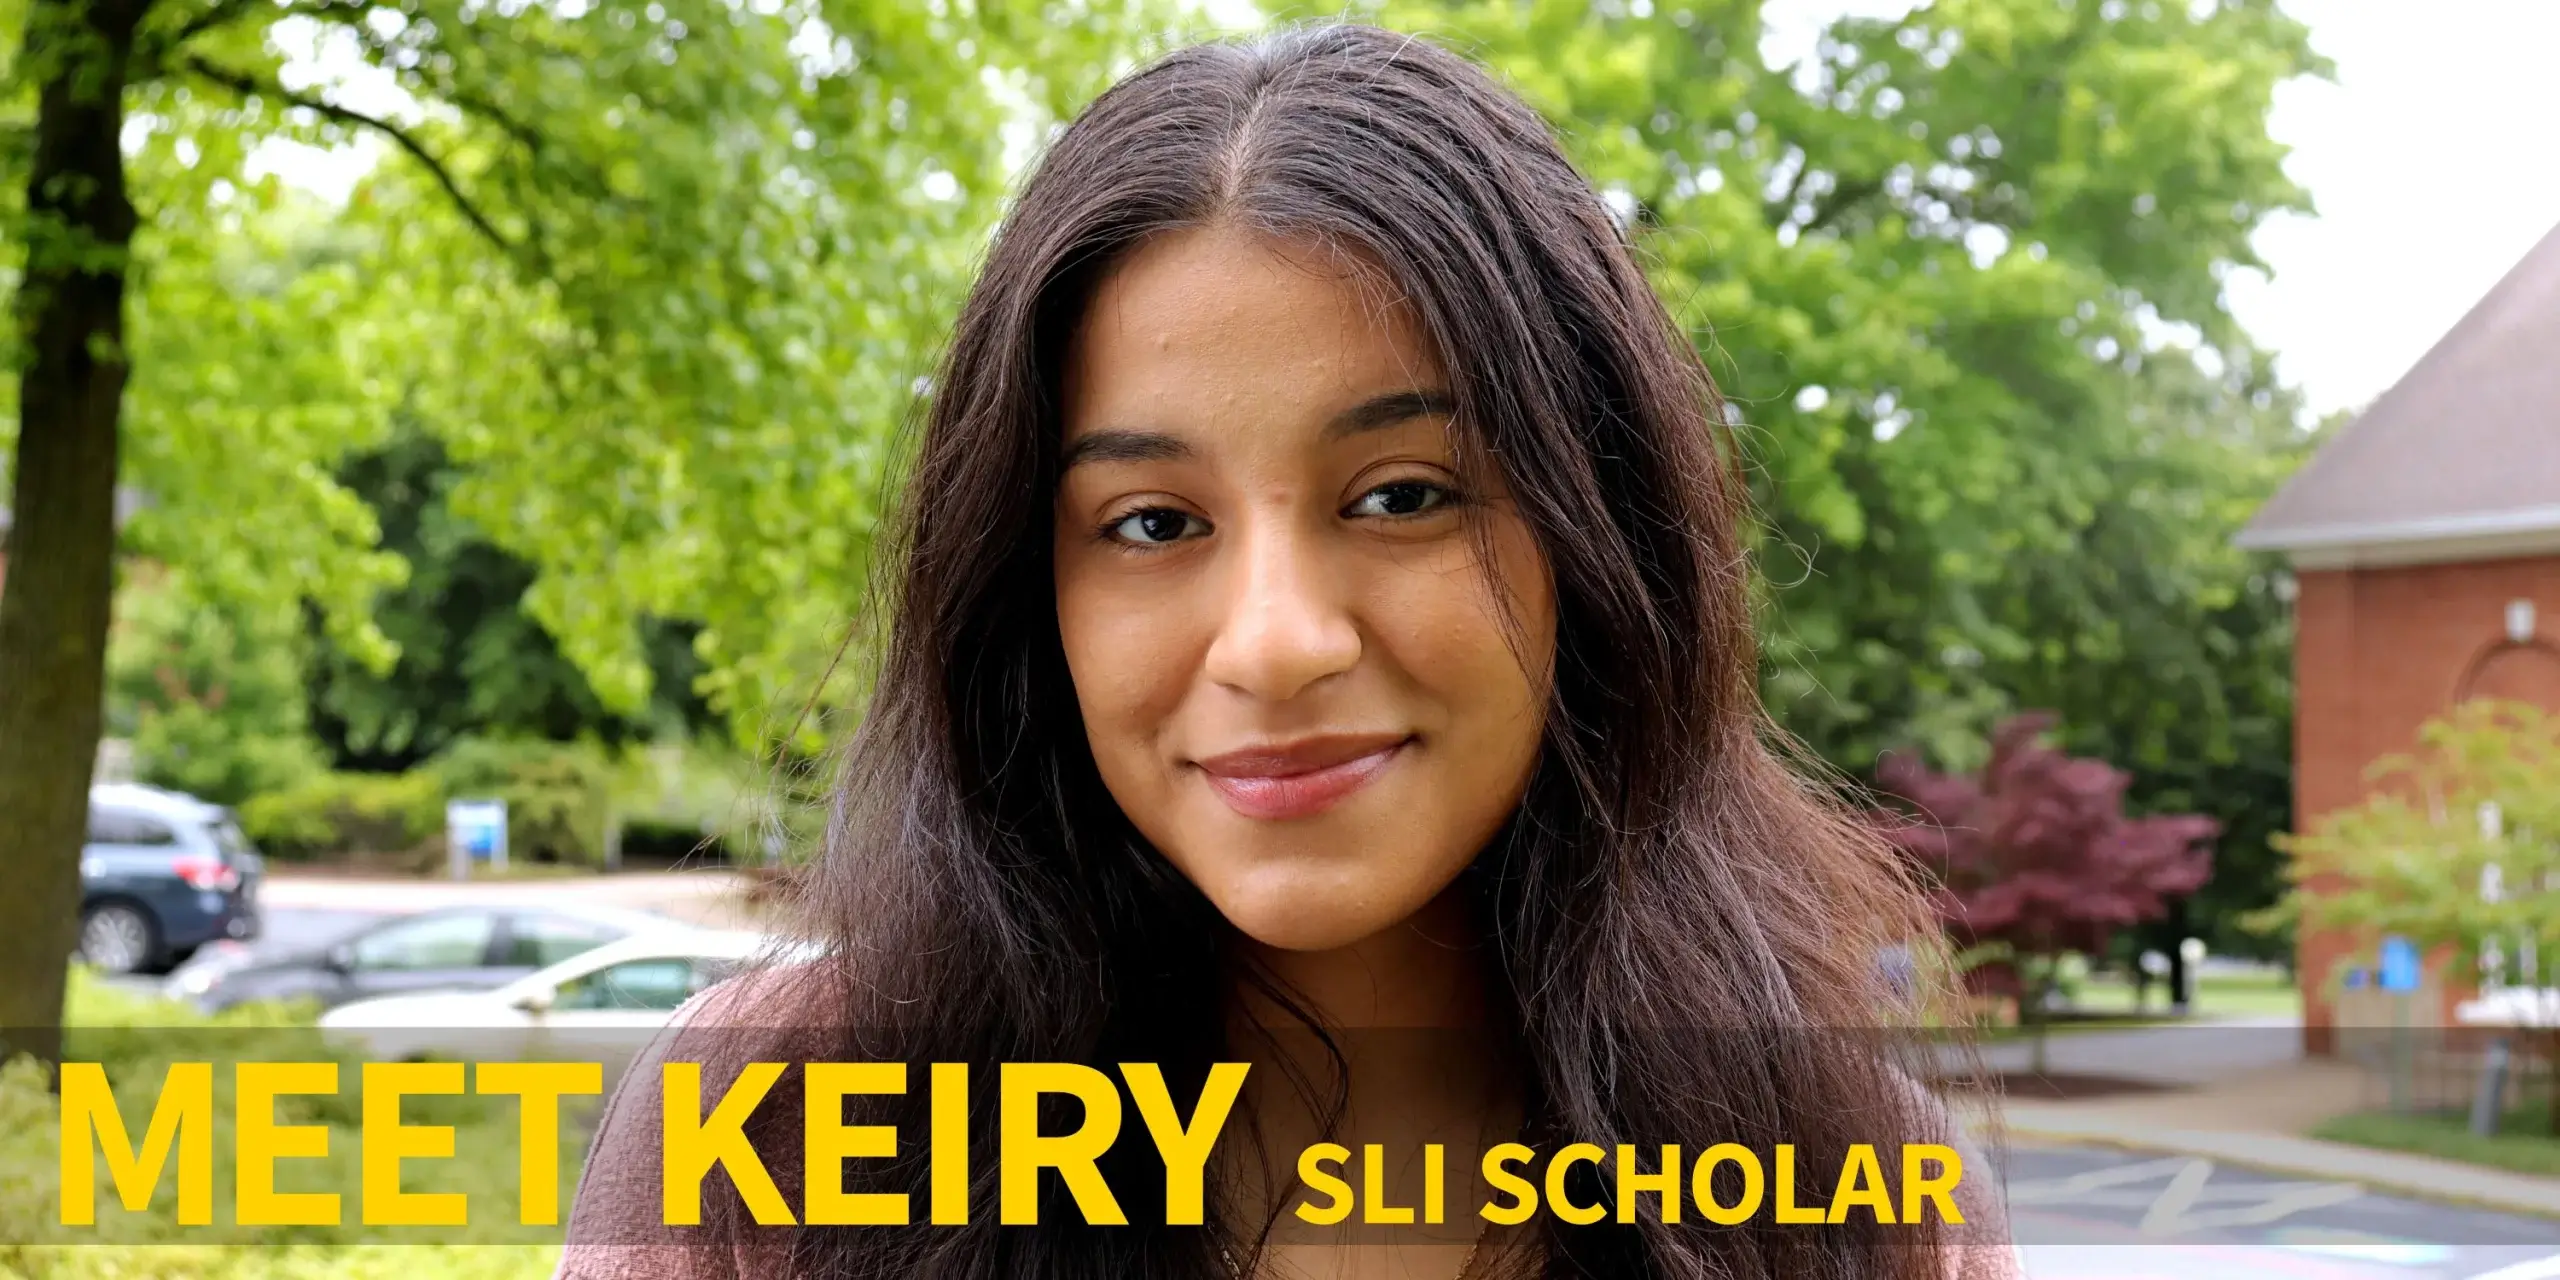 Meet Keiry, SLI scholar